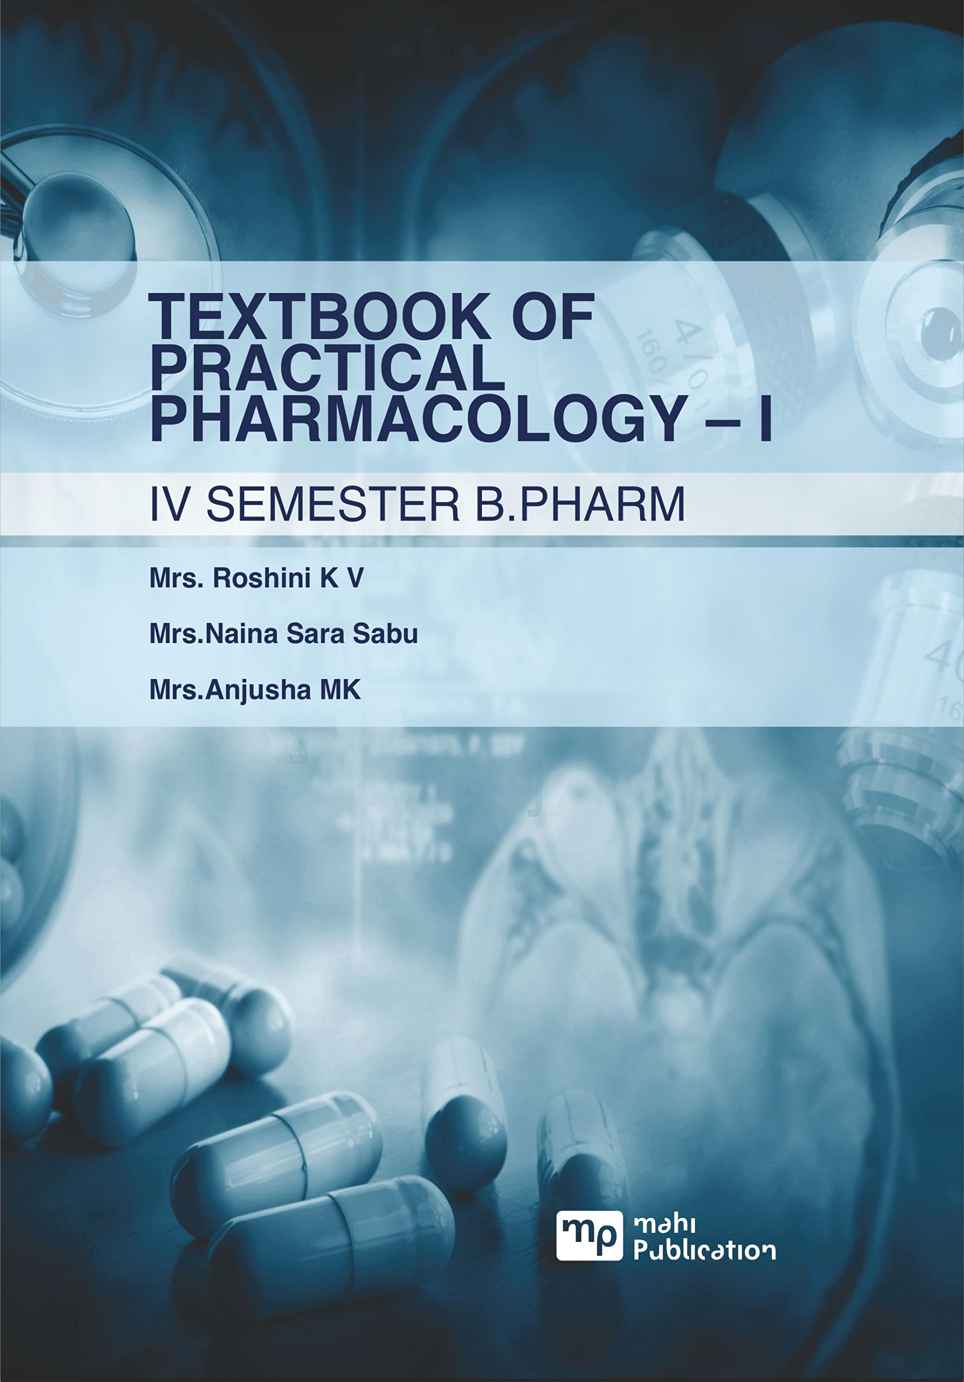 Textbook of Practical Pharmacology – I IV Semester B.Pharm